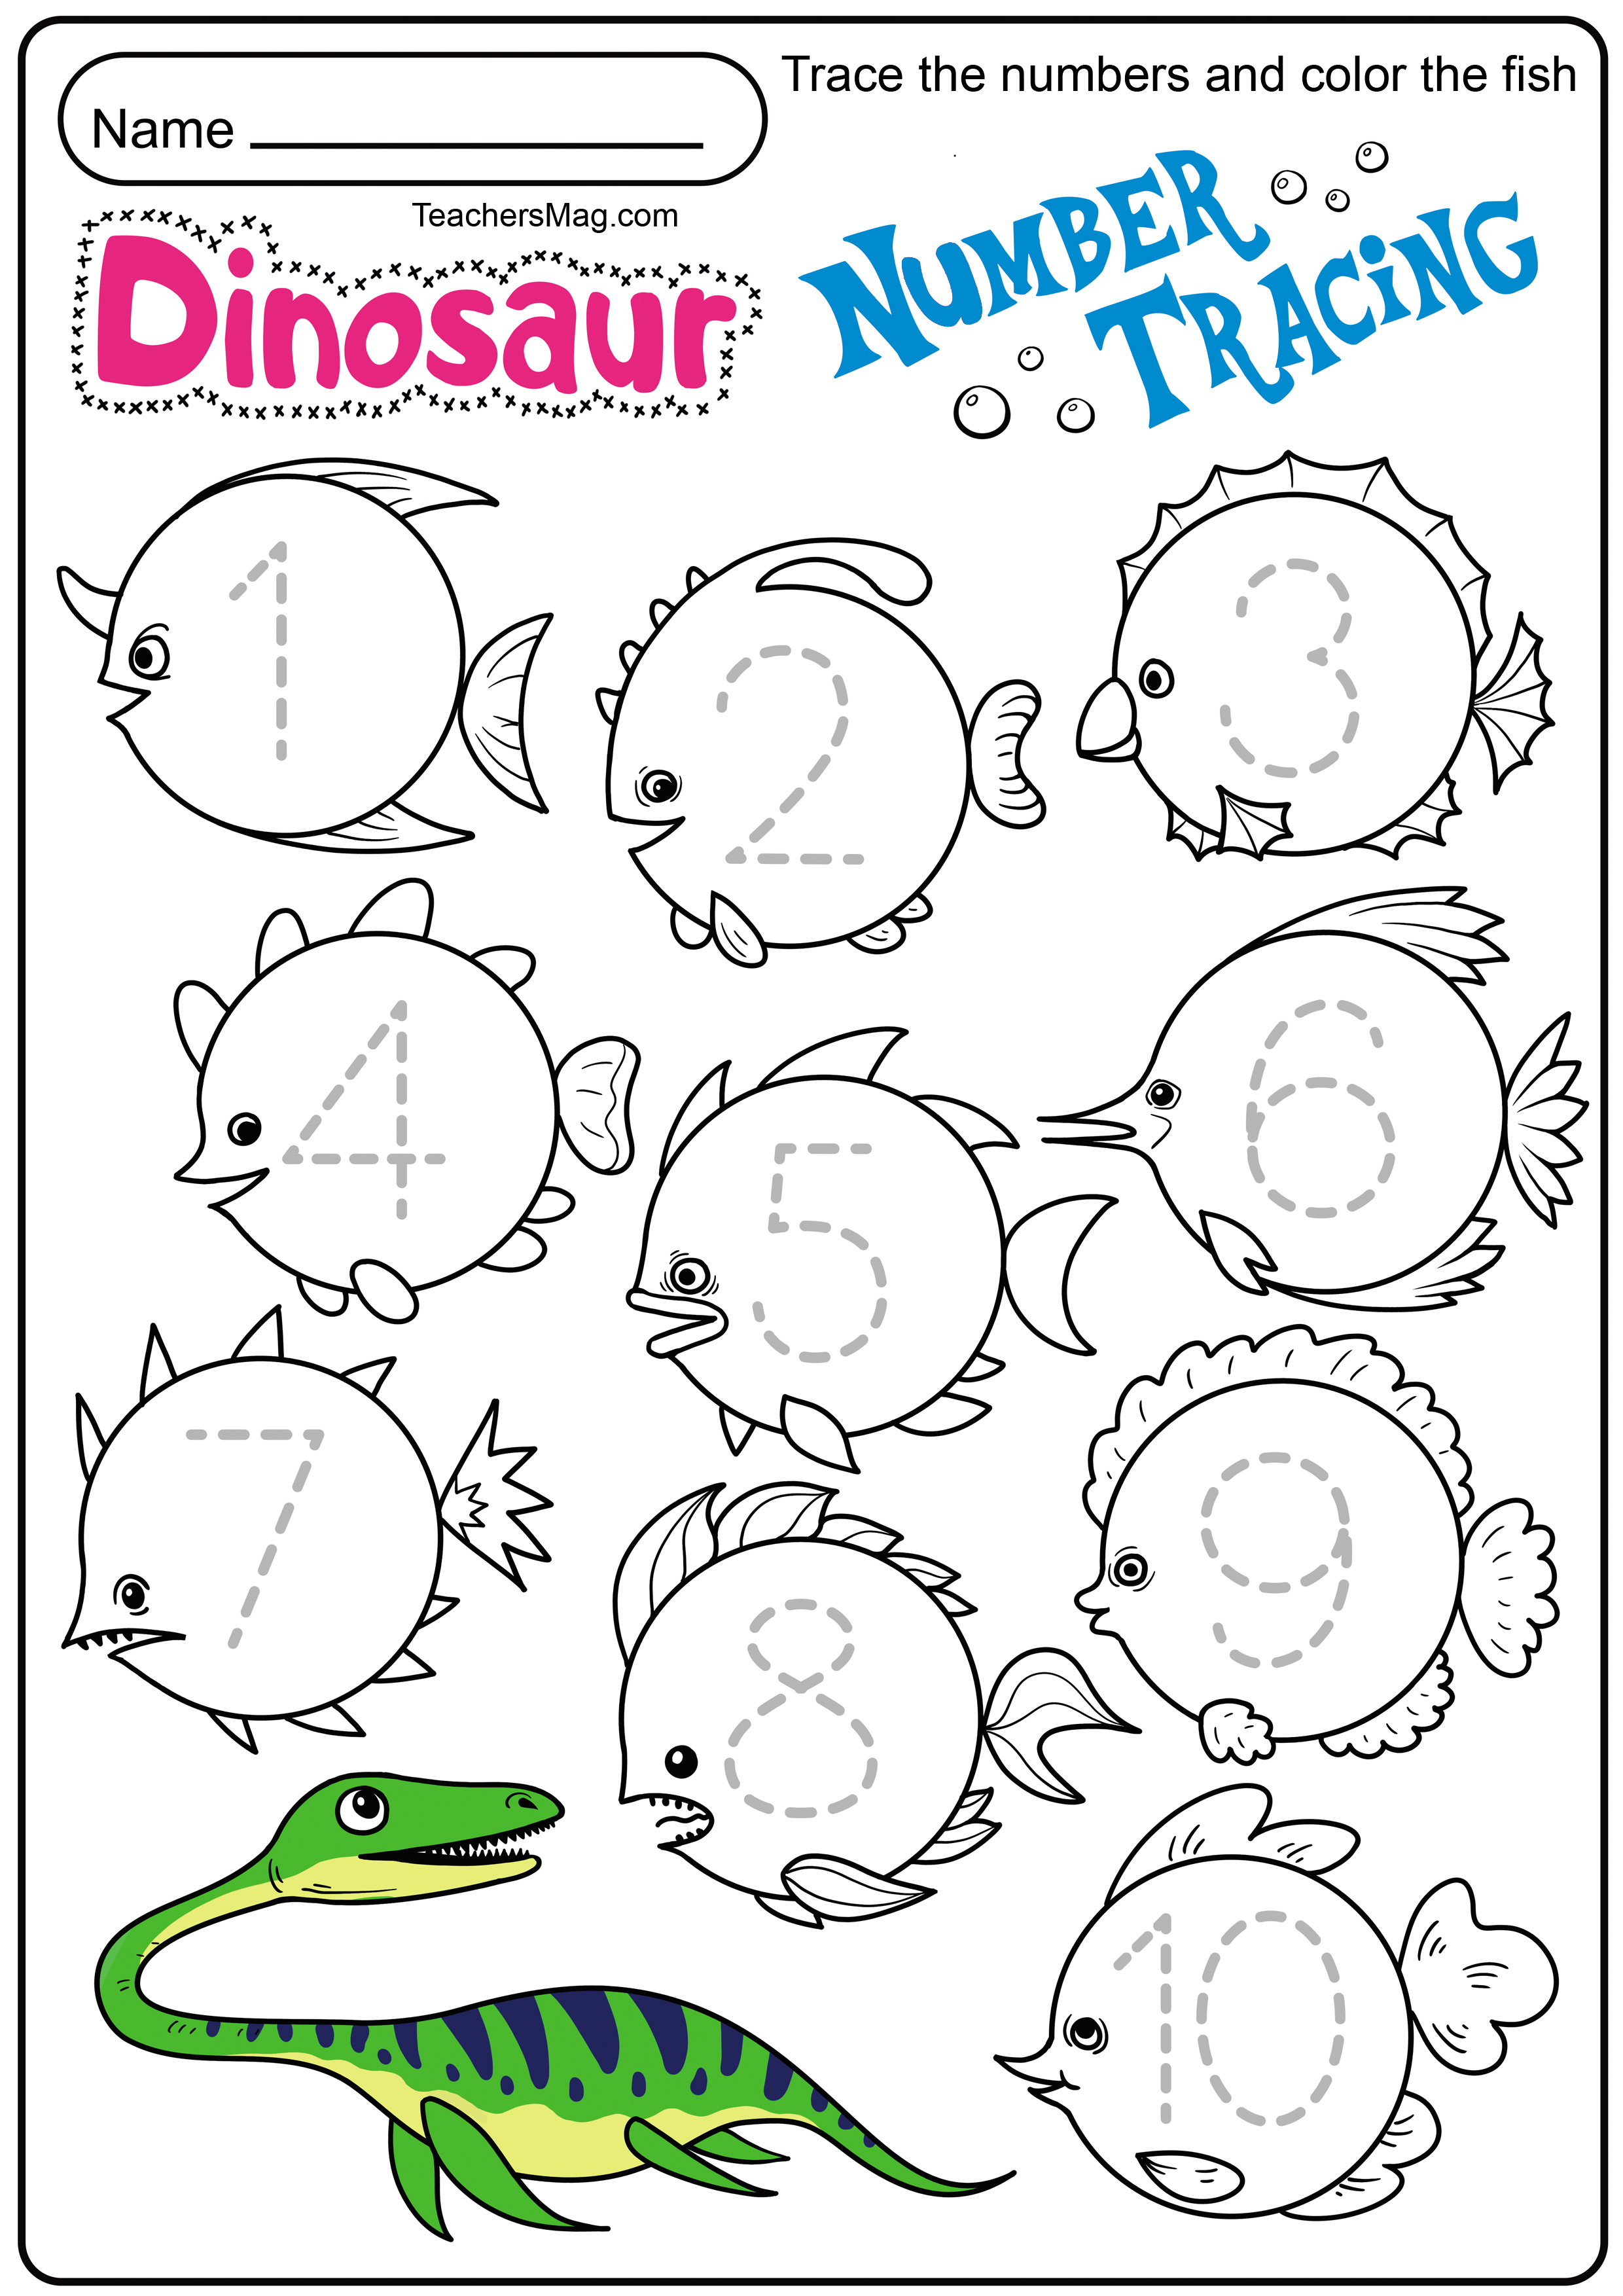 kindergarten-worksheets-book-pdf-dinosaurs-preschool-dinosaur-worksheets-dinosaur-activities